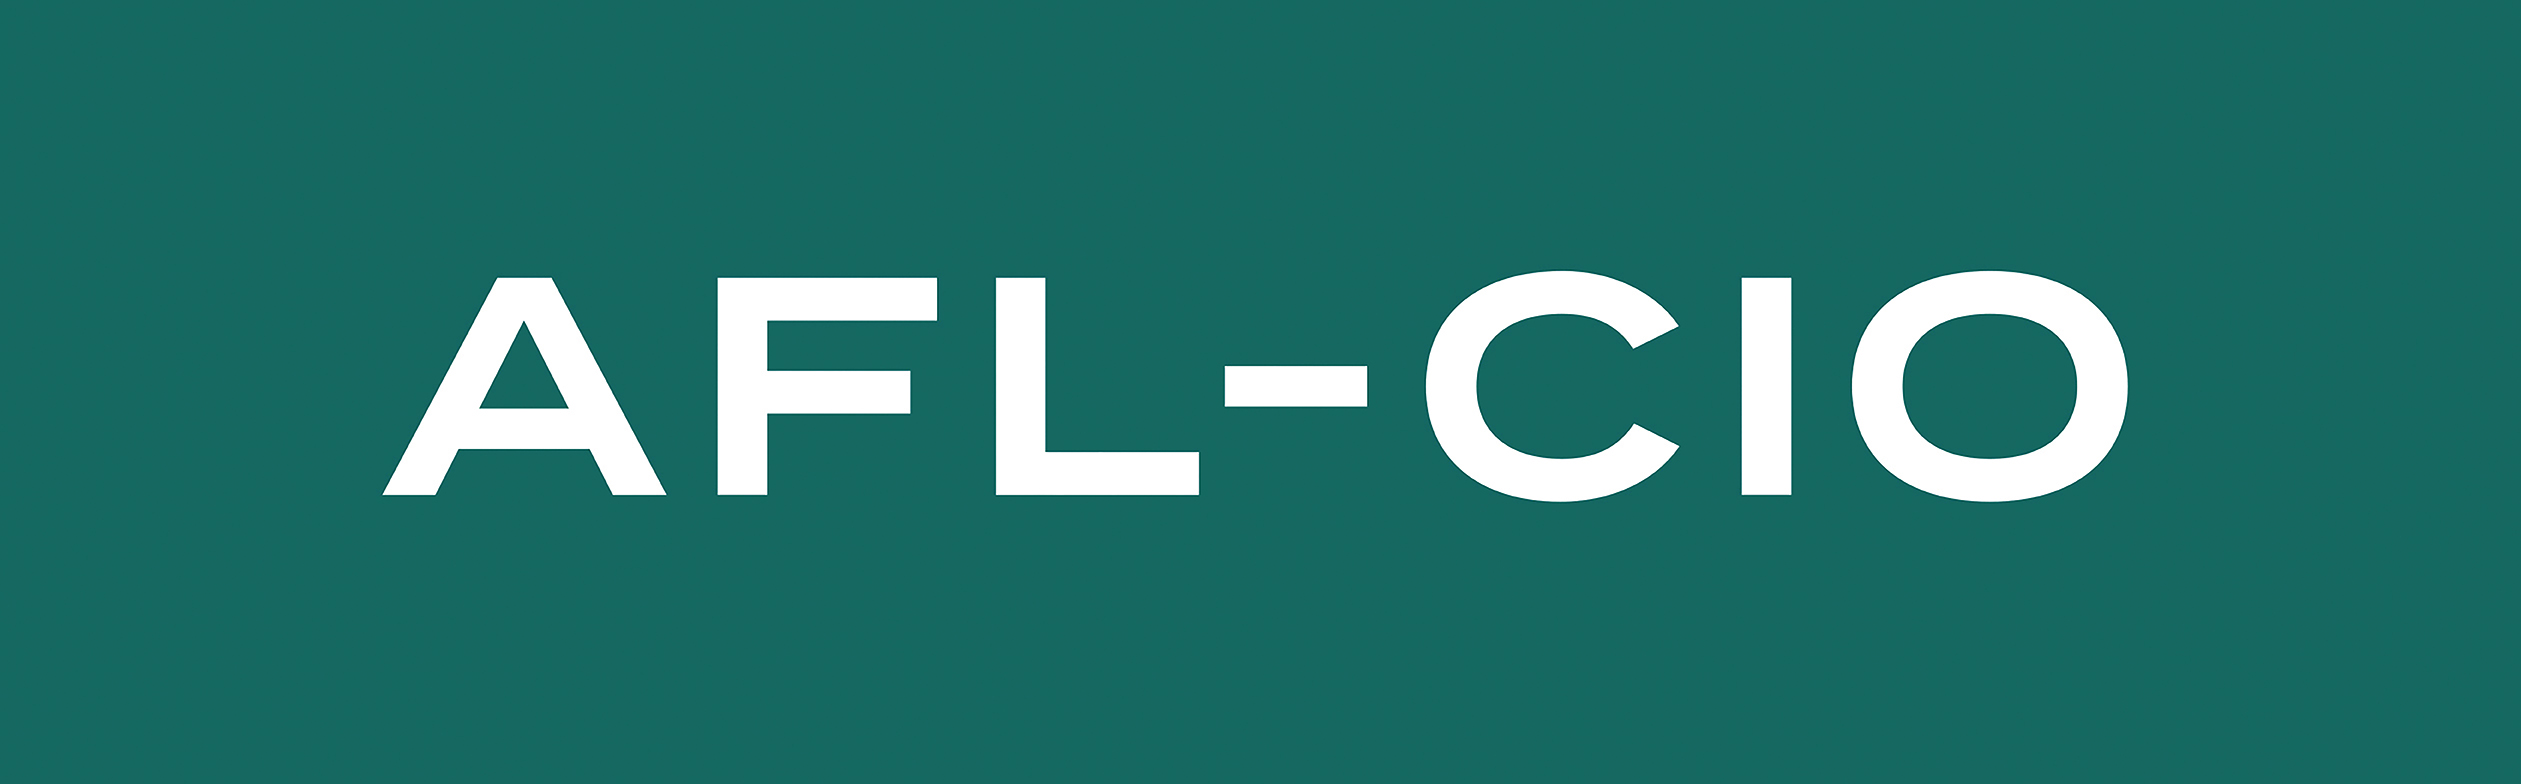 American Federation of Labor and Congress of Industrial Organizations (AFL-CIO)